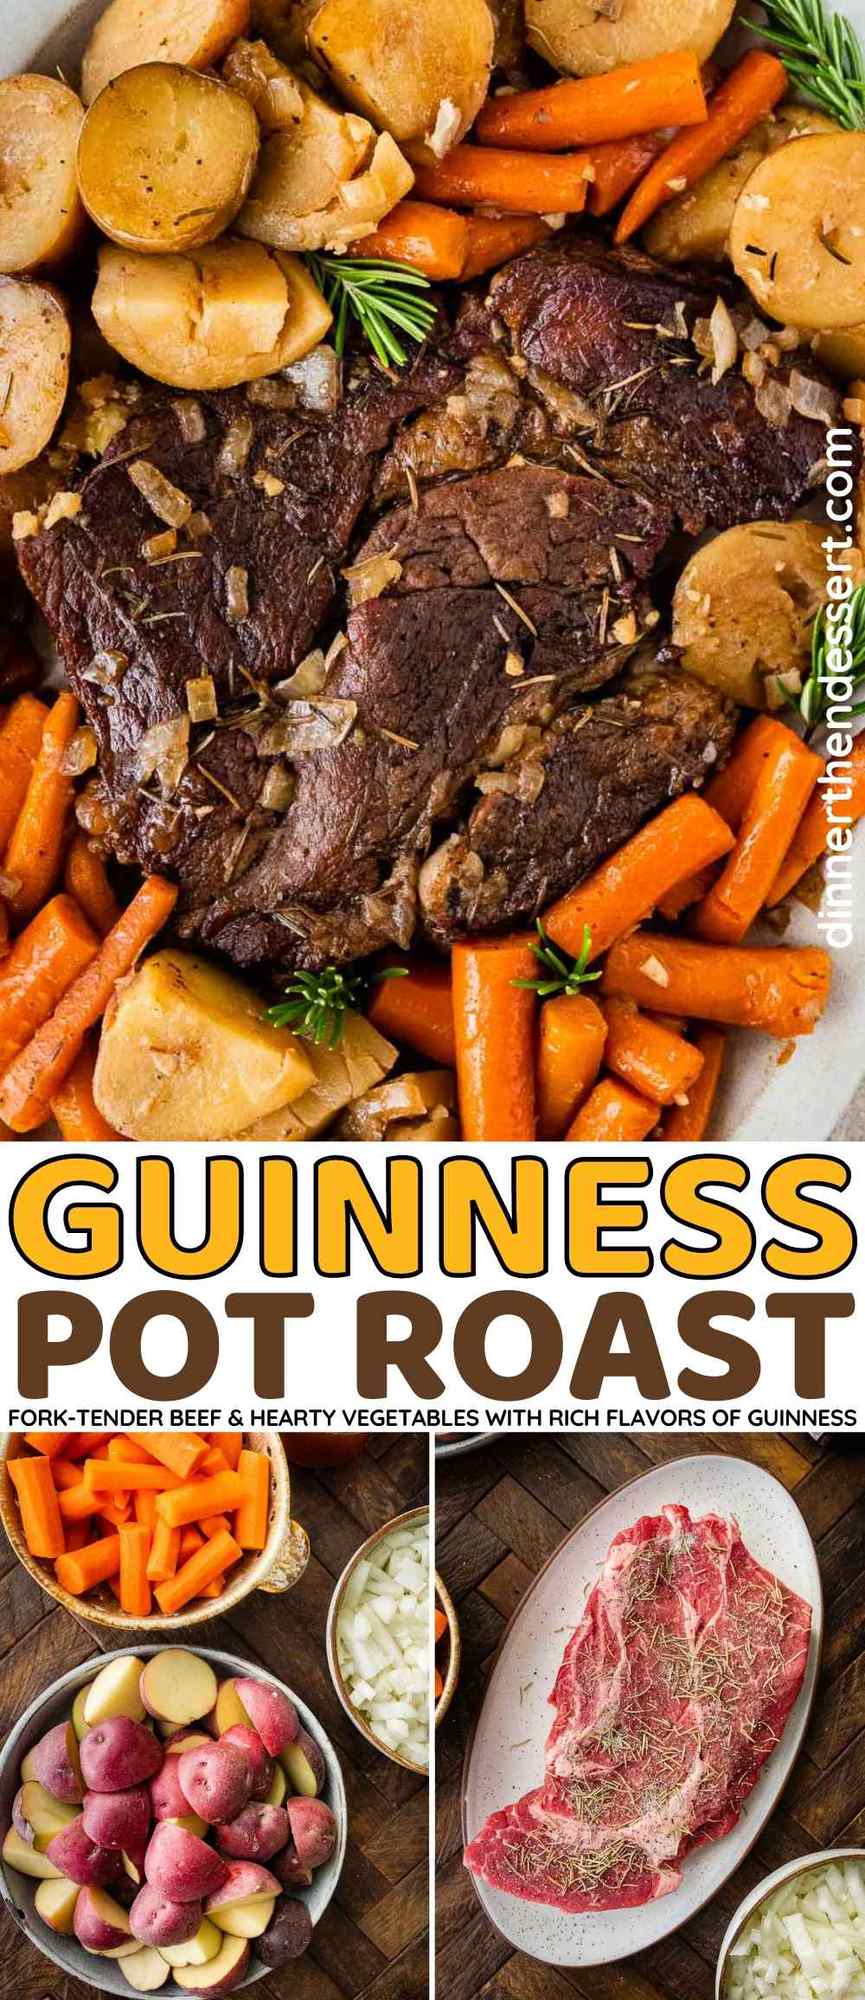 Guinness Pot Roast collage